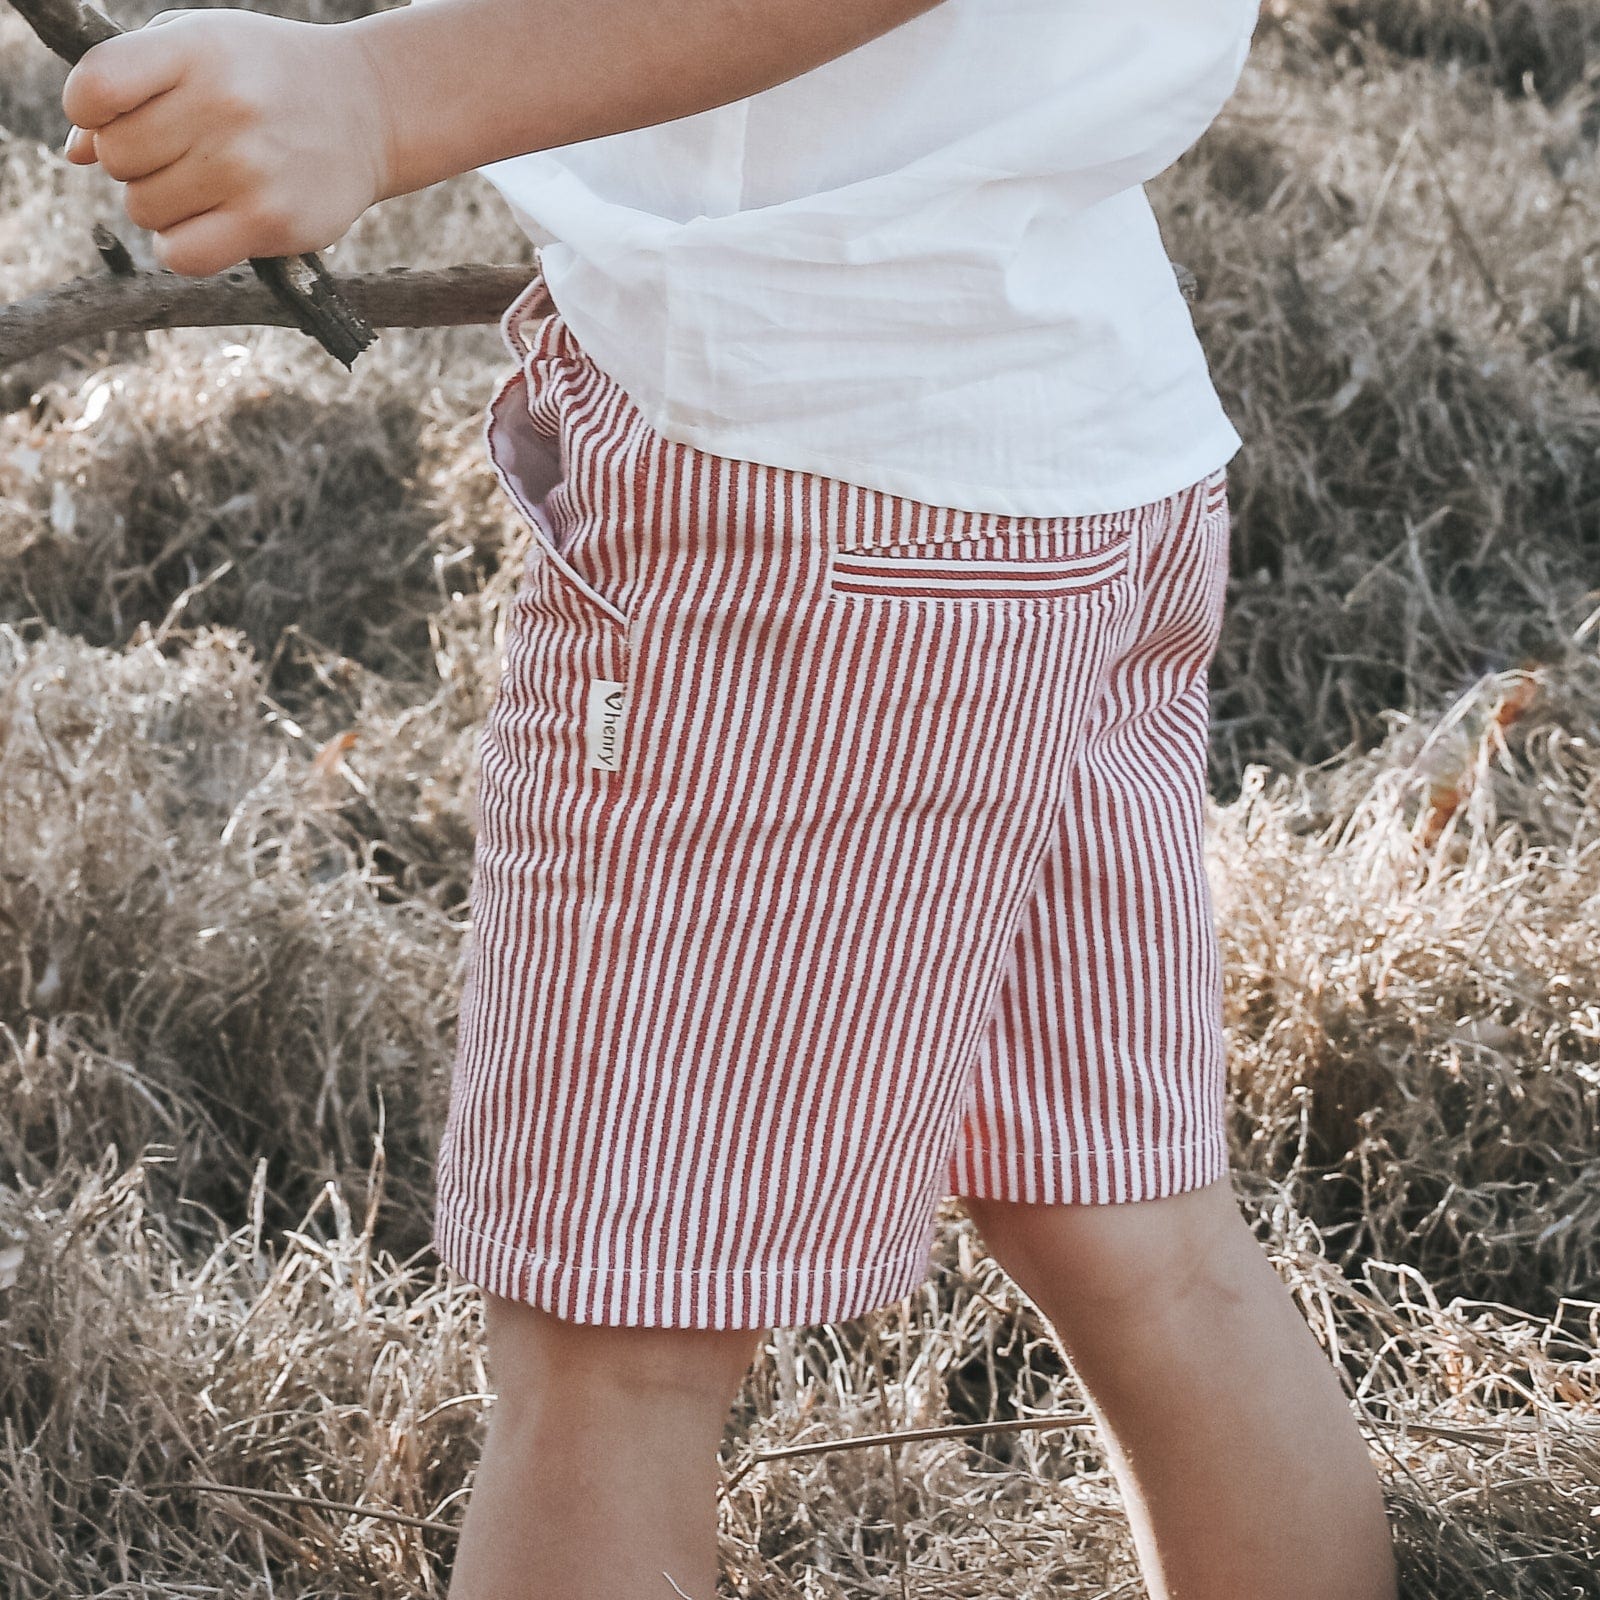 Love Henry Bottoms Boys Dress Shorts - Red Pinstripe